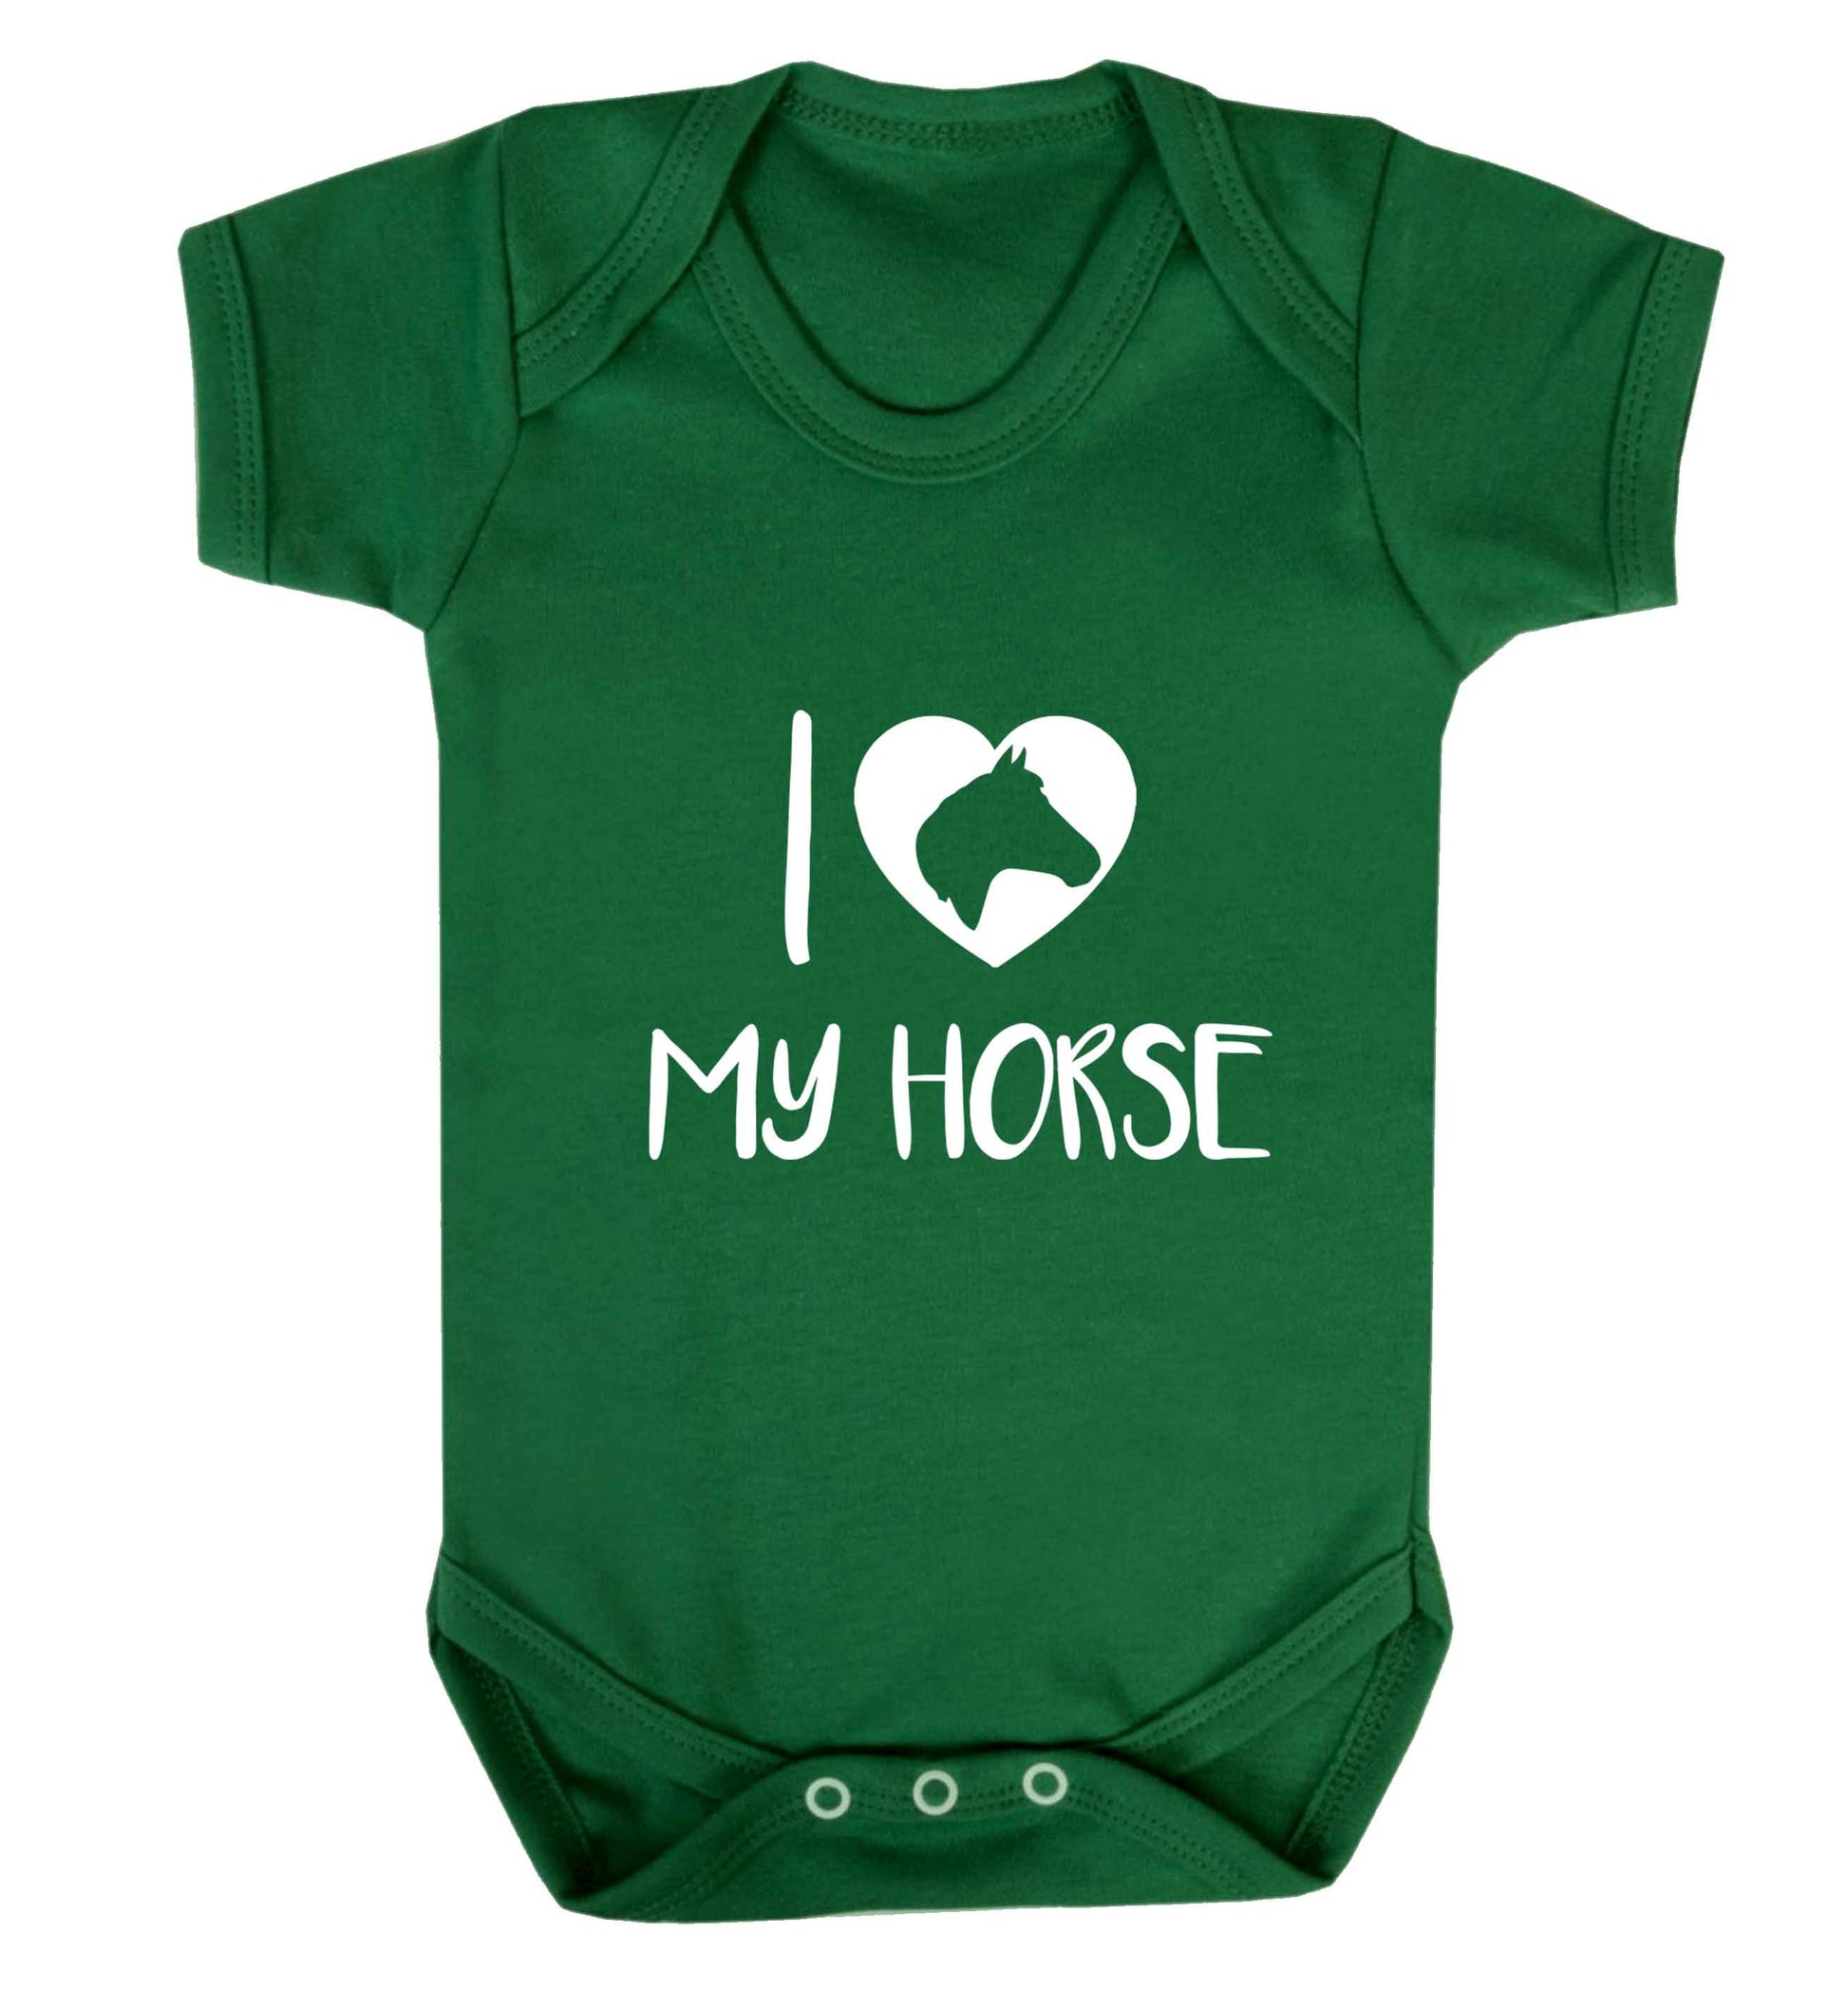 I love my horse baby vest green 18-24 months